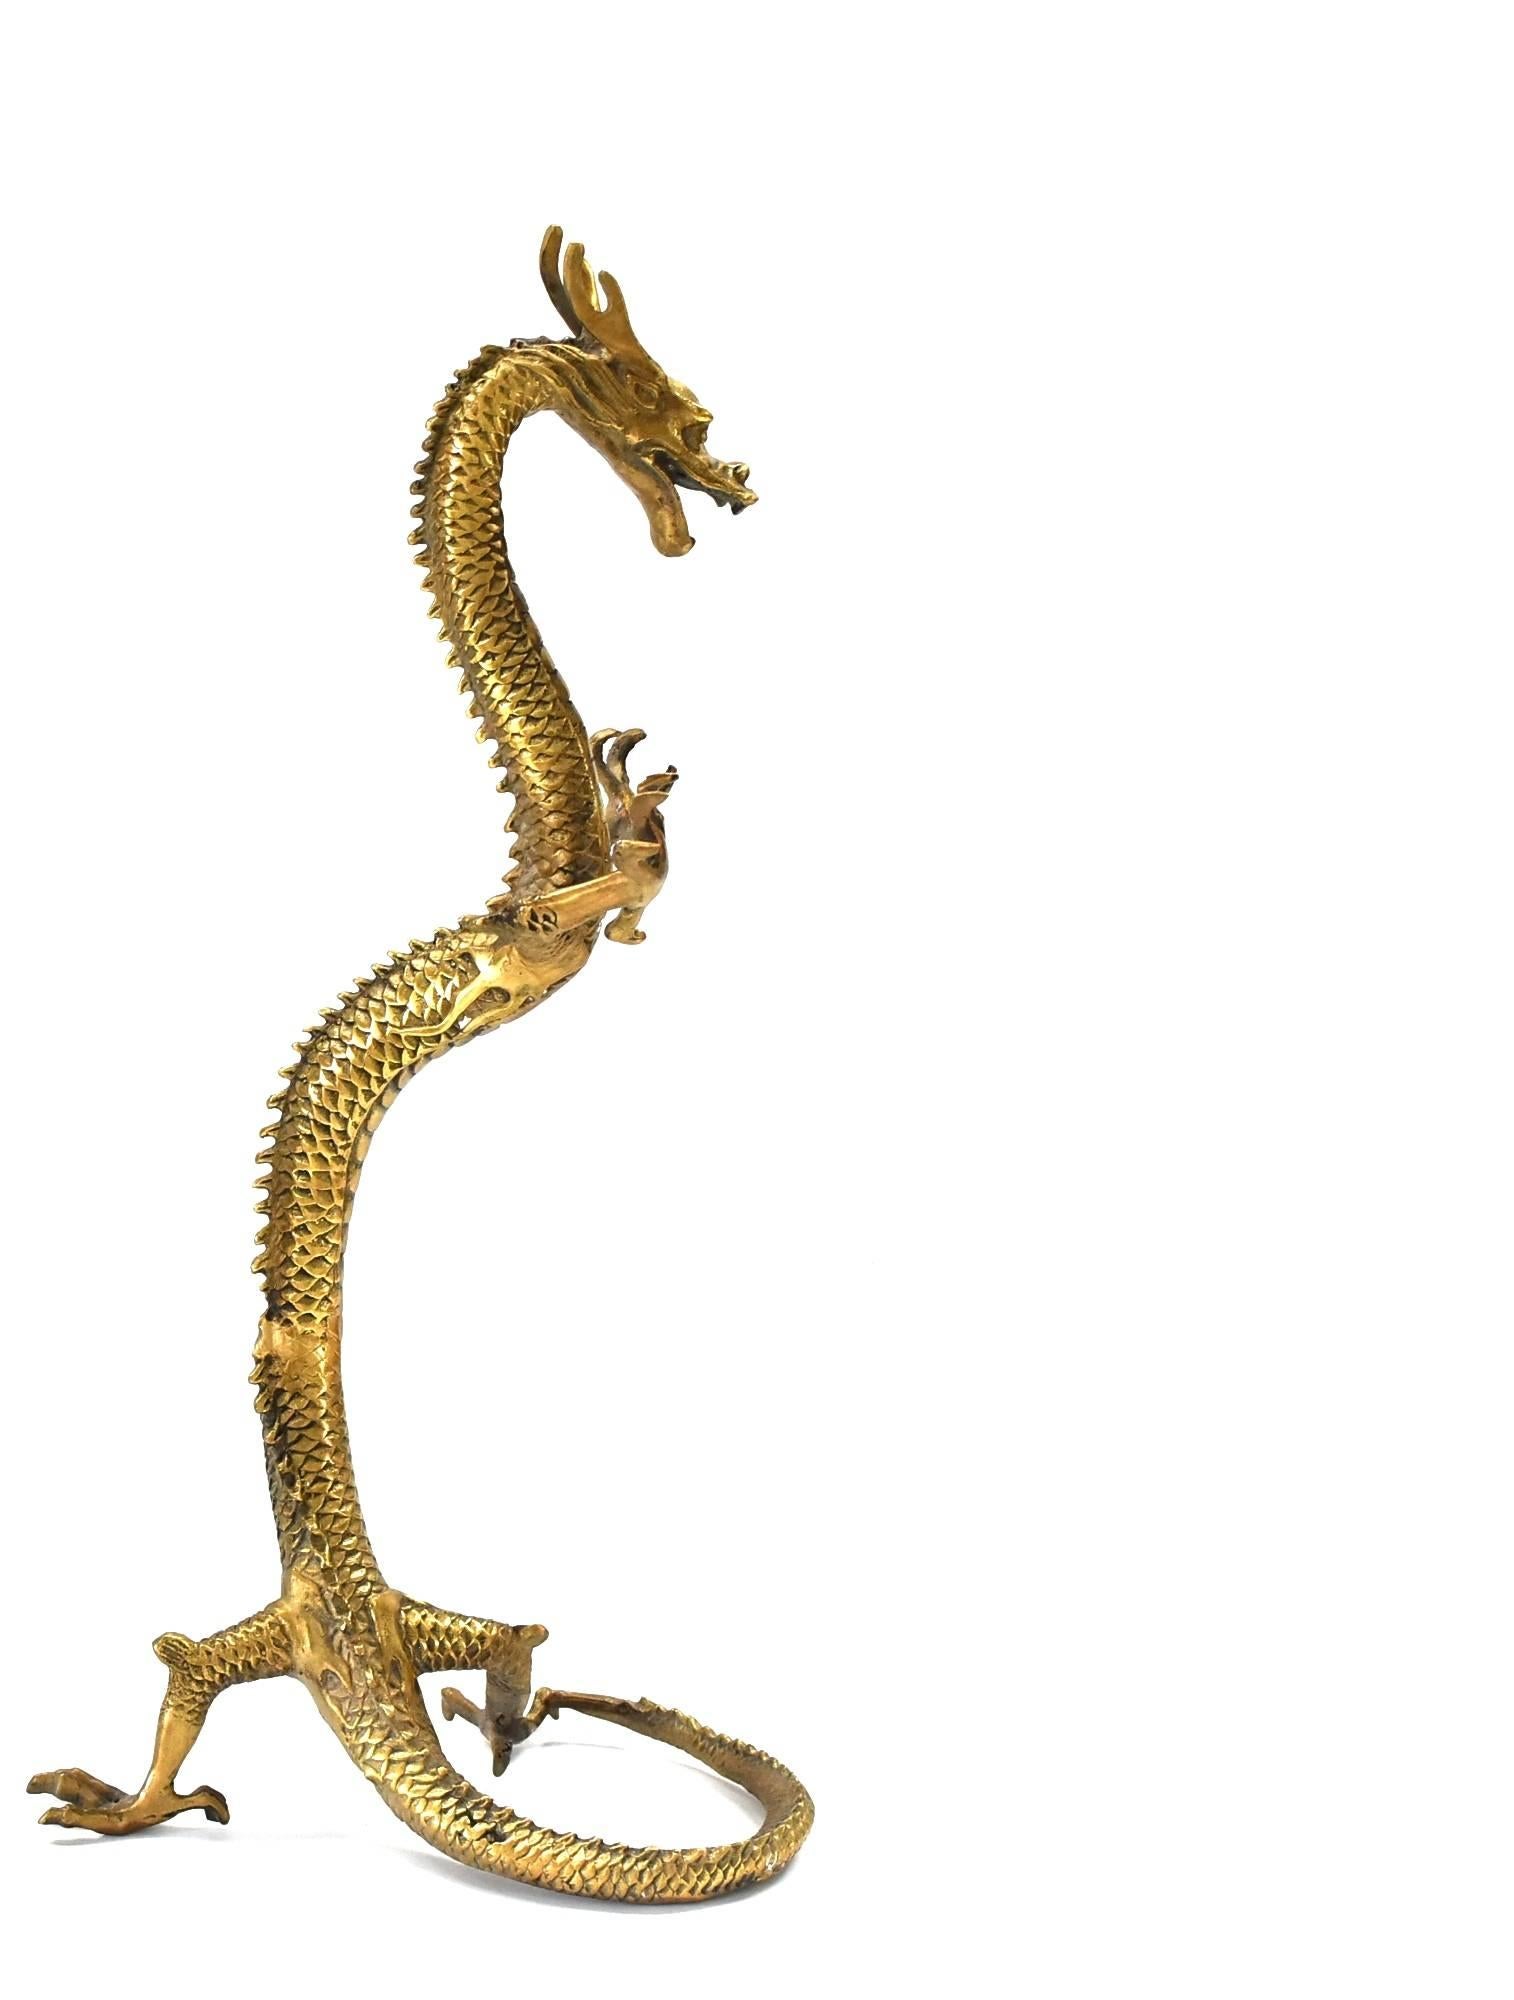 Unique Brass Dragon, Large Standing 13